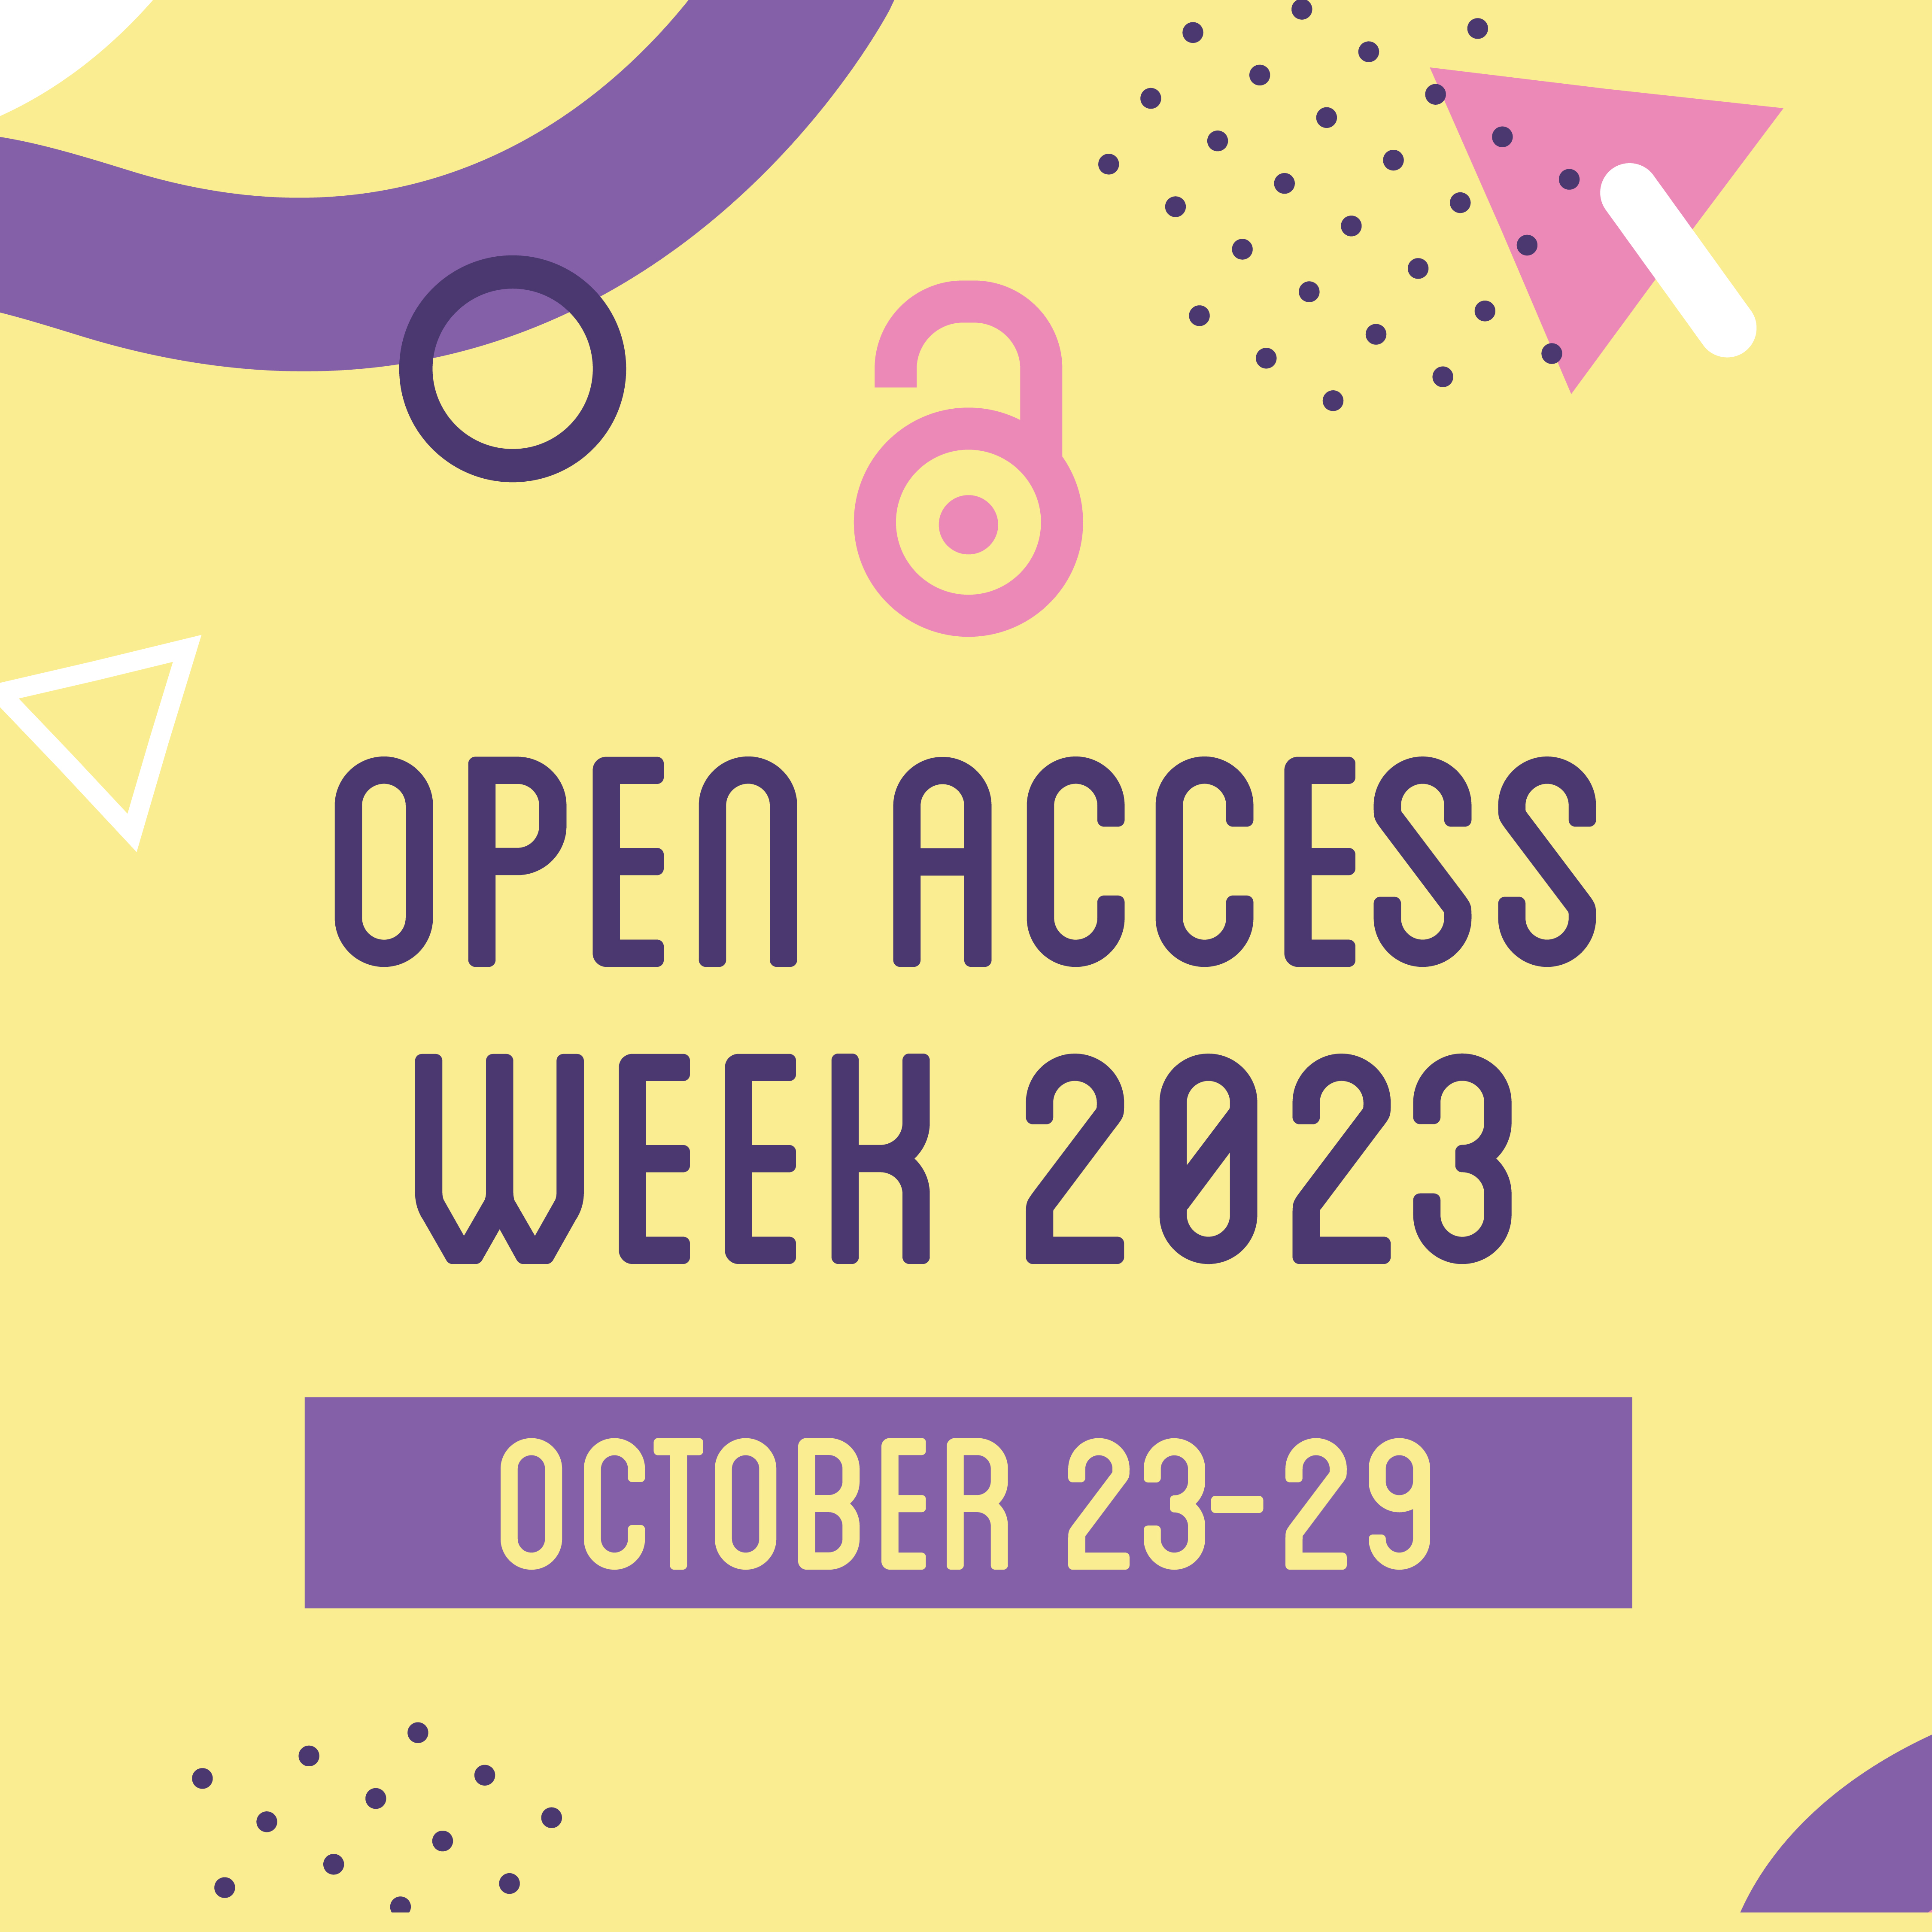 Open Access Week 2023 October 23-29